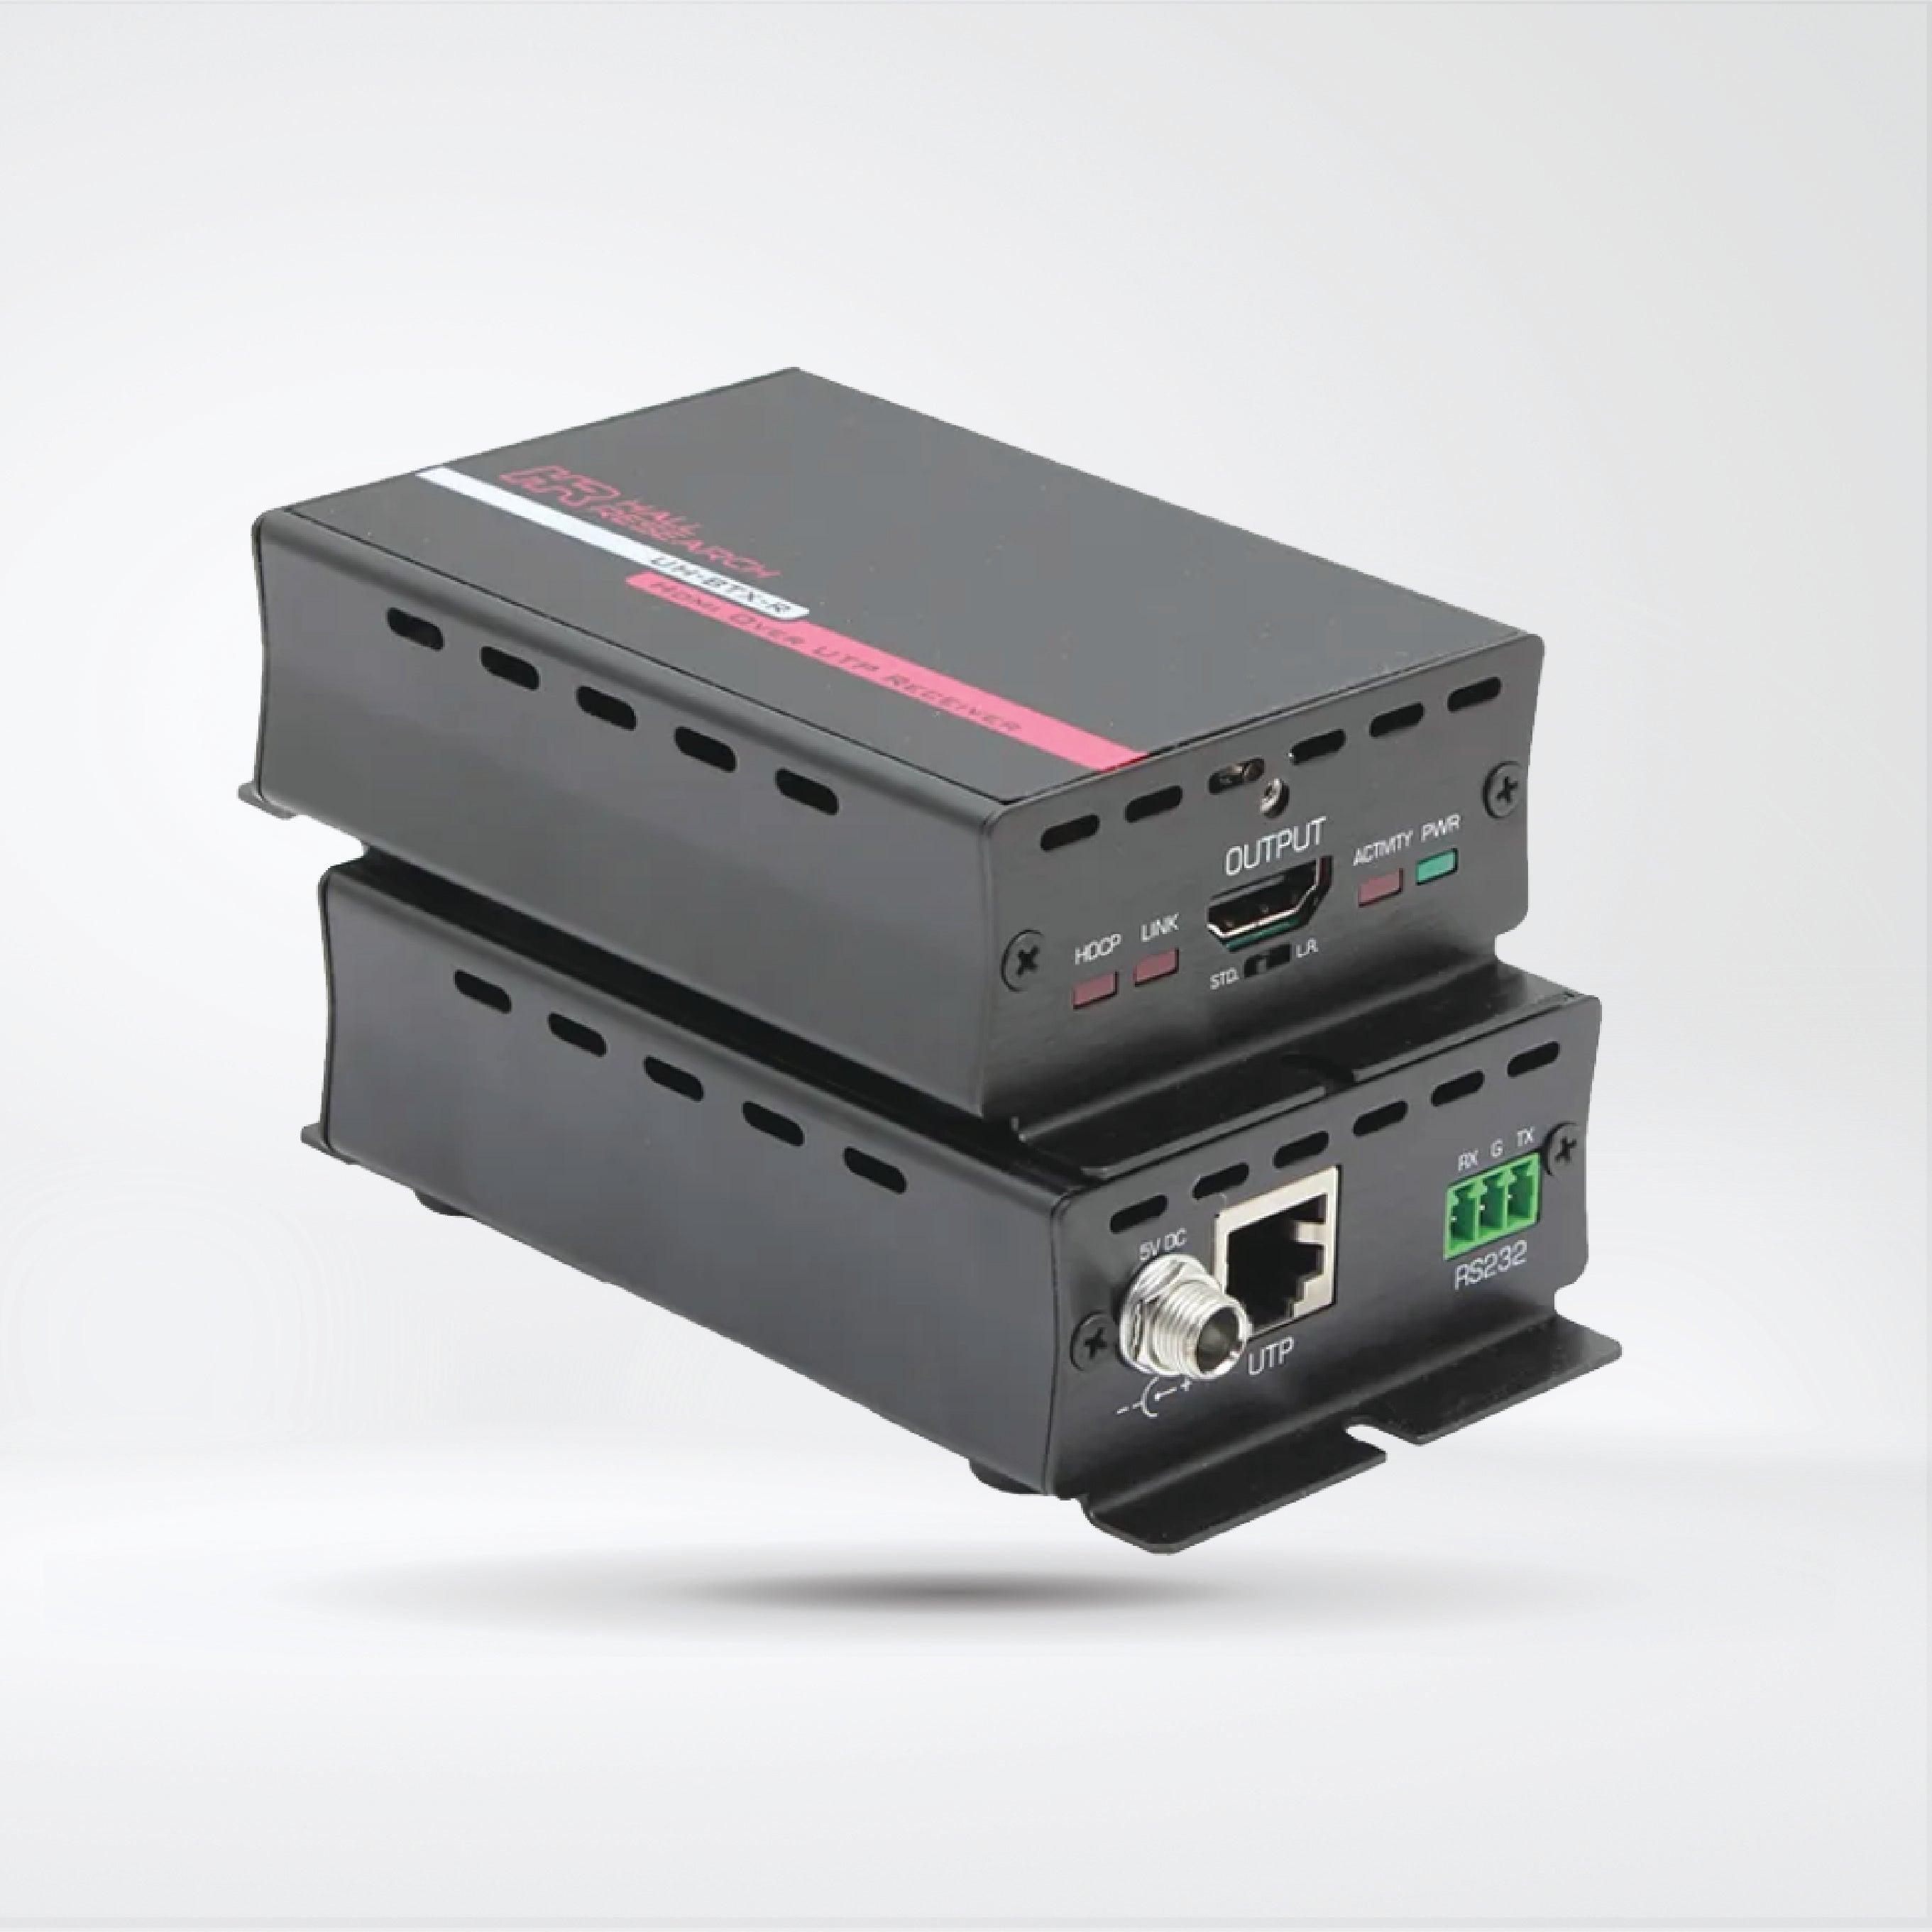 UH-BTX-R HDMI over UTP Extender with HDBaseT™ (HDBaseT™) Receiver - Riverplus